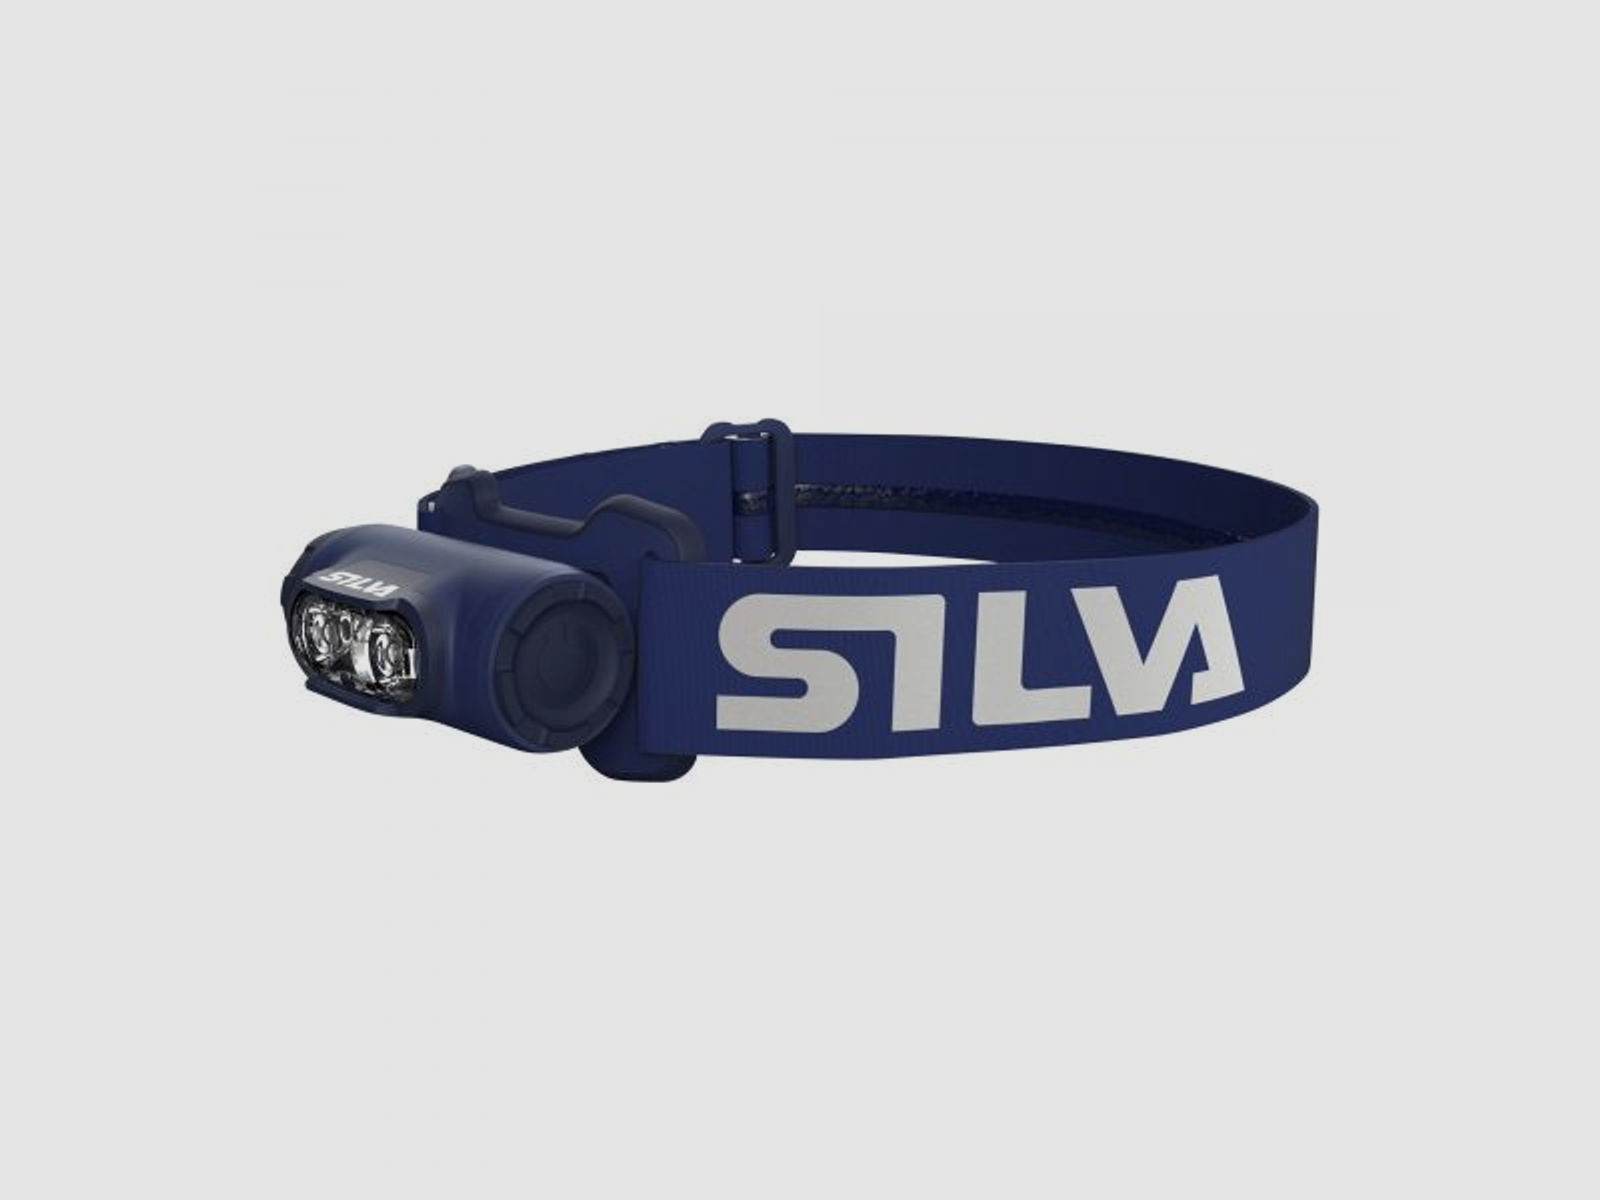 Silva Silva Stirnlampe Explore 4 blau